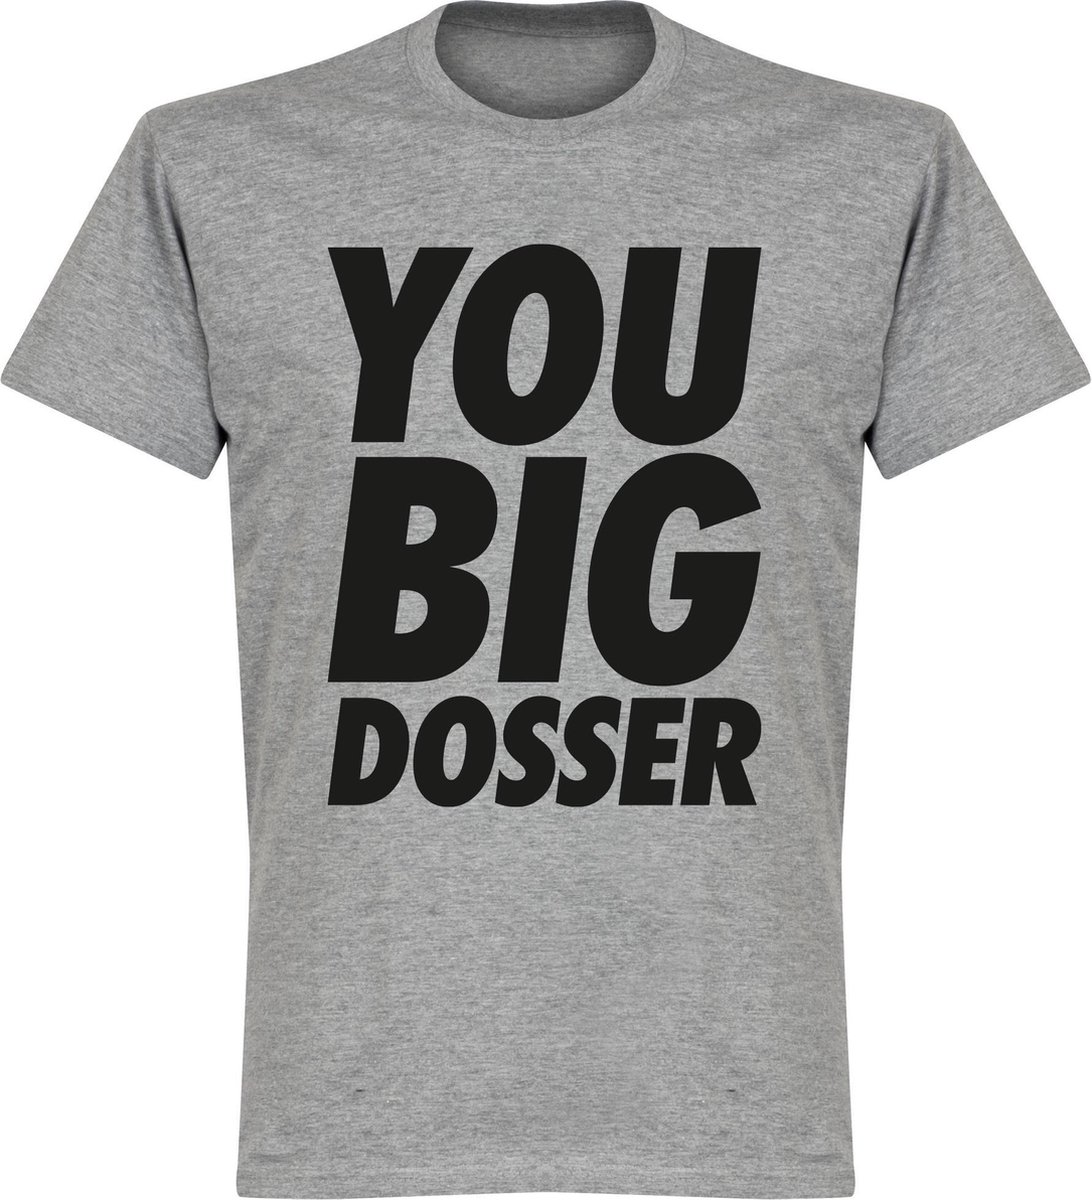 You Big Dosser T-shirt - Grijs - S